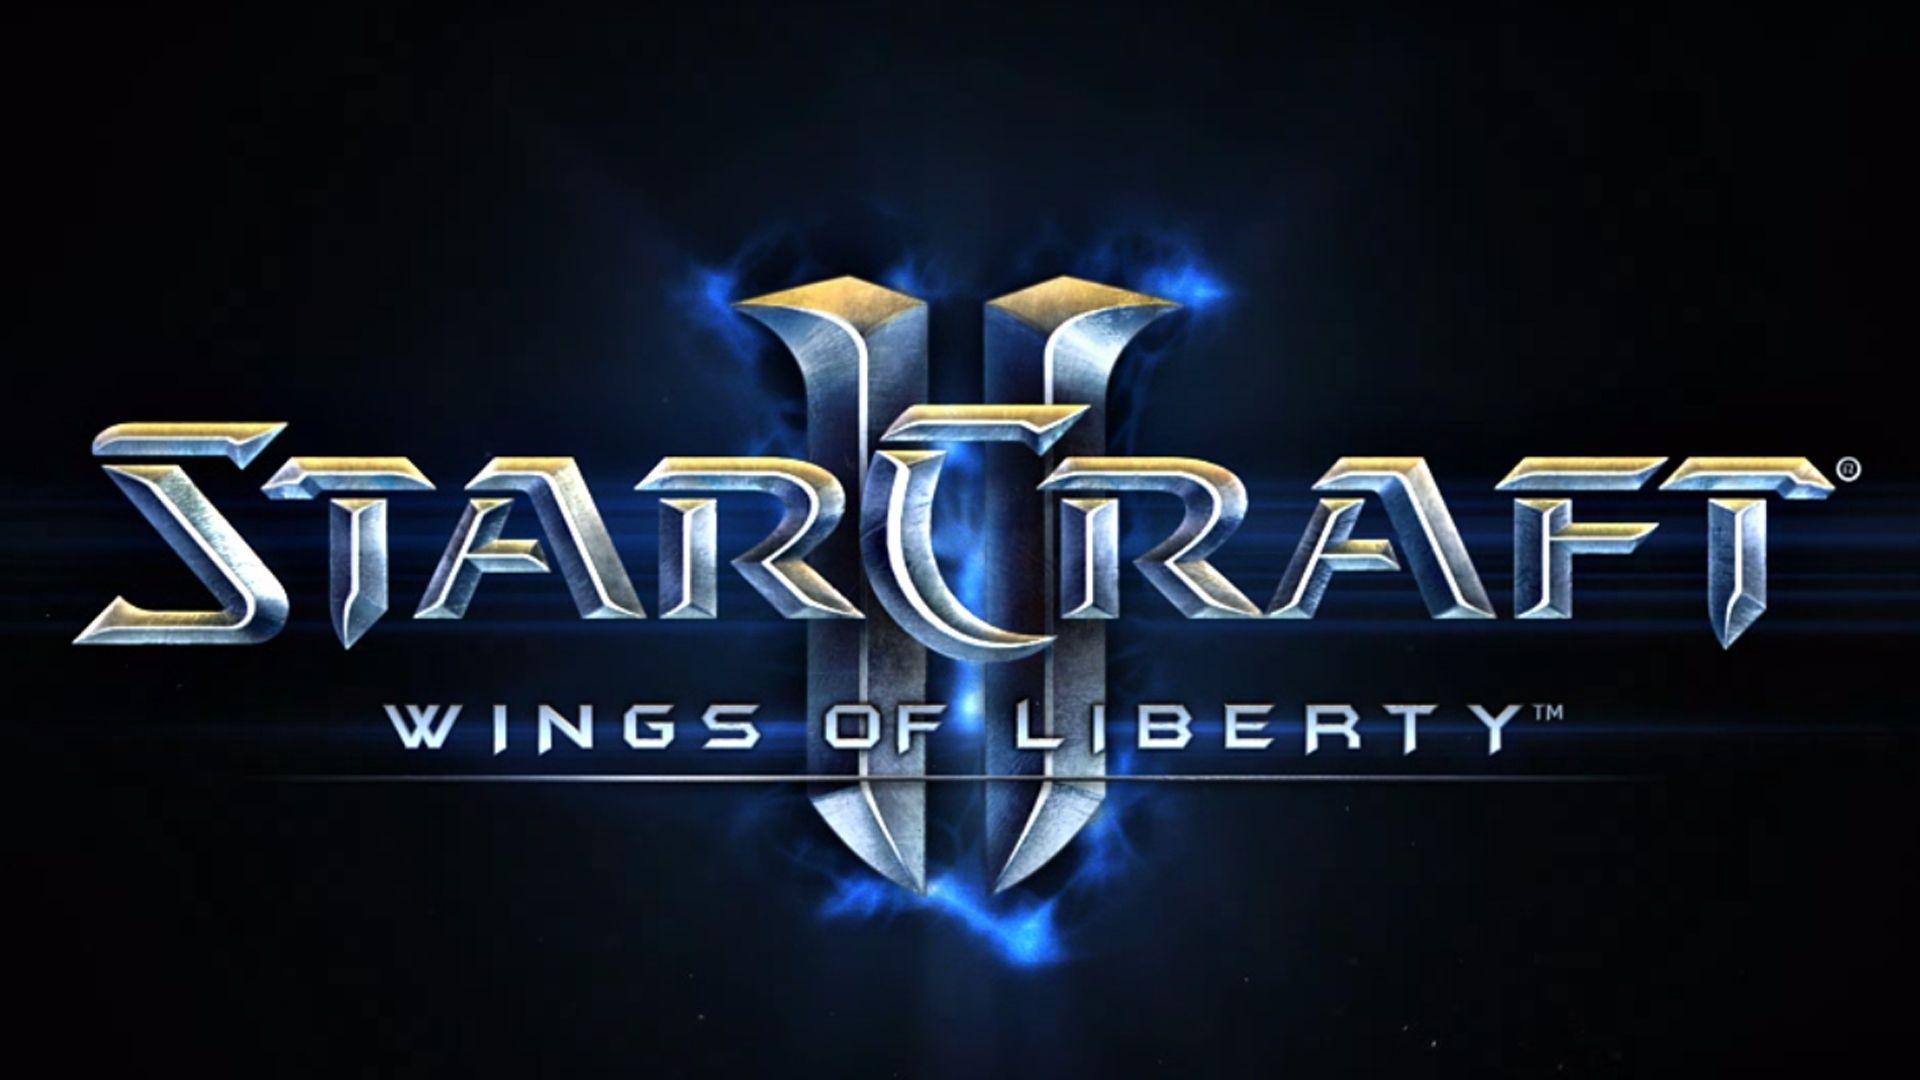 Starcraft 2: Wings of Liberty Main Screen HD Wallpaper. Download